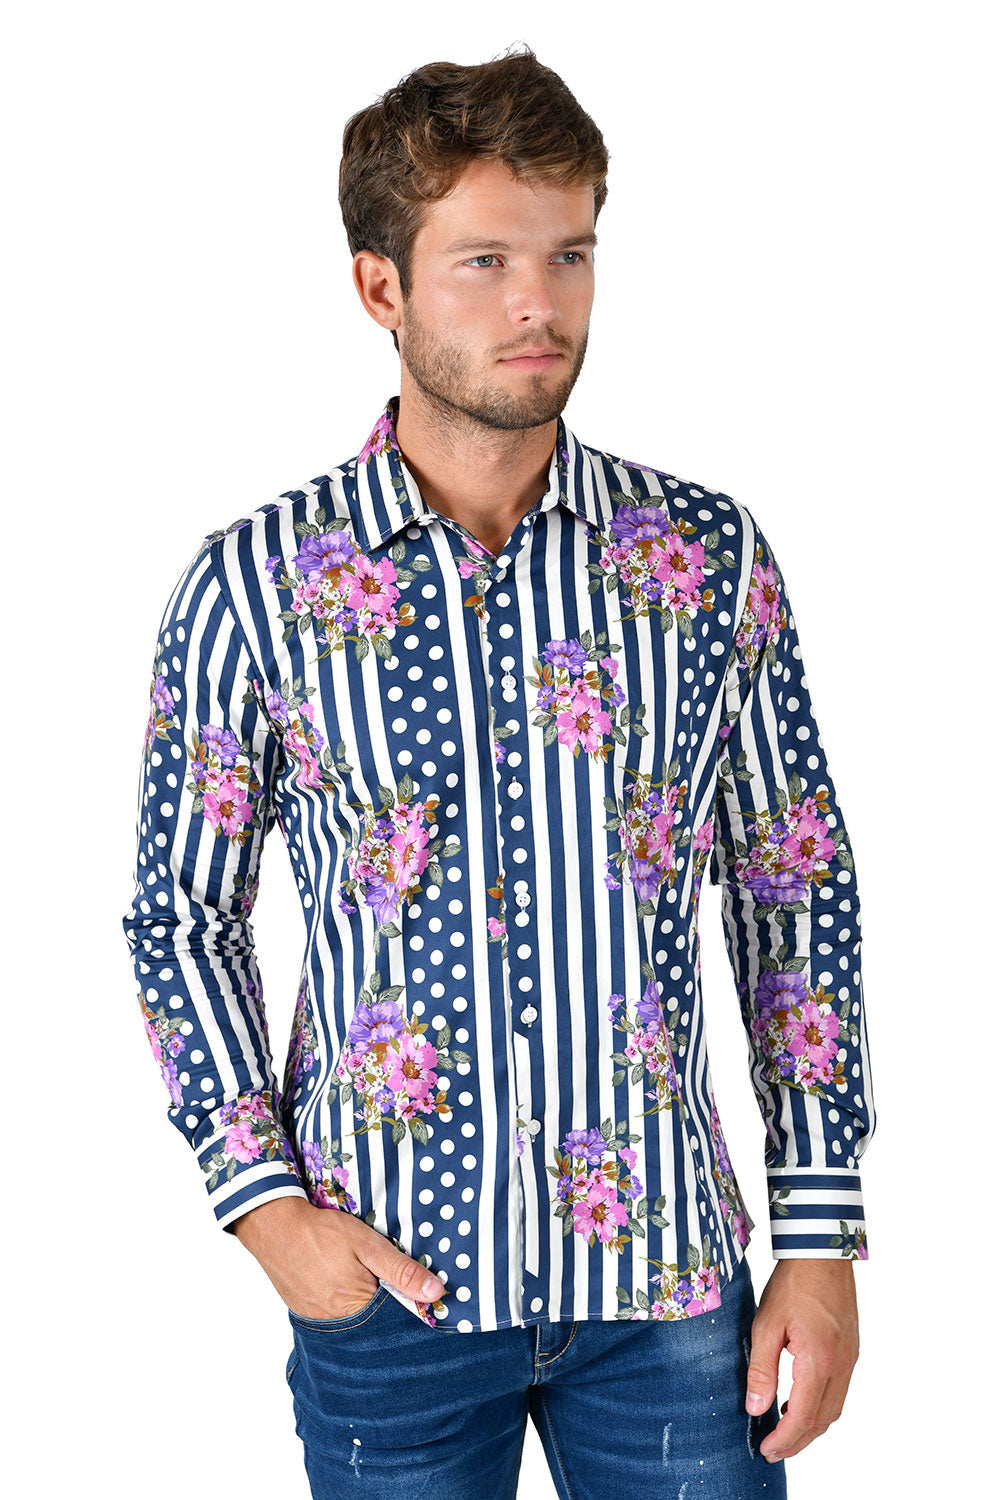 BARABAS Men's Floral Polka Dotted Pattern Button Down Shirts B351 Navy